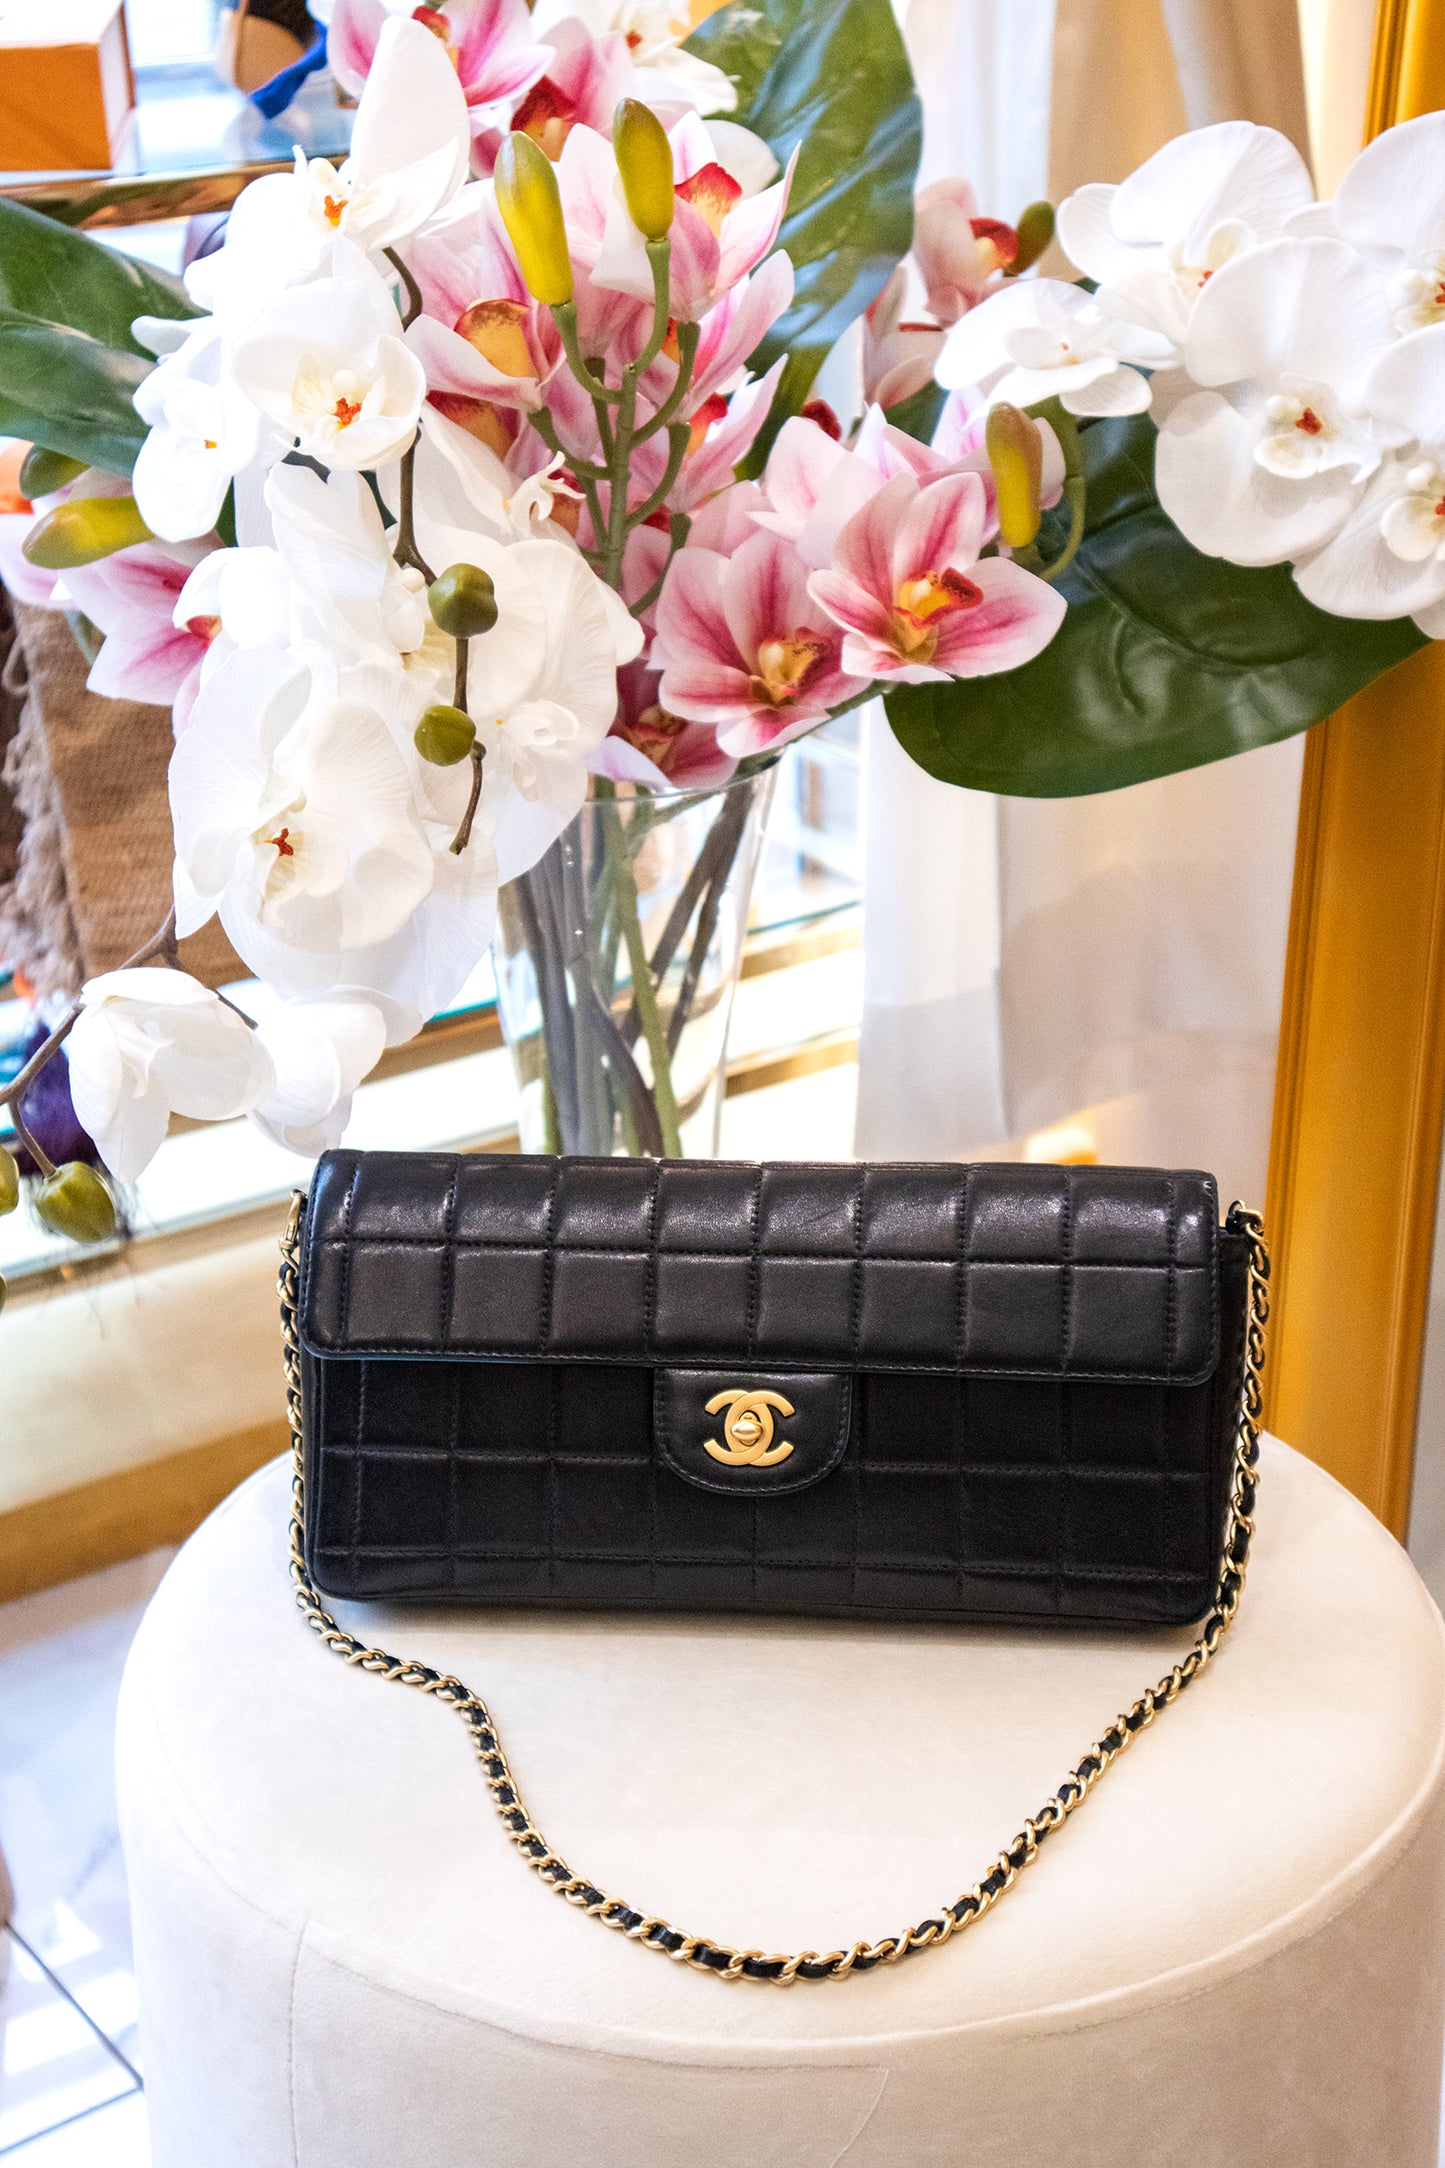 Chanel - Classic Baguette Tasche schwarz Goldene Hardware